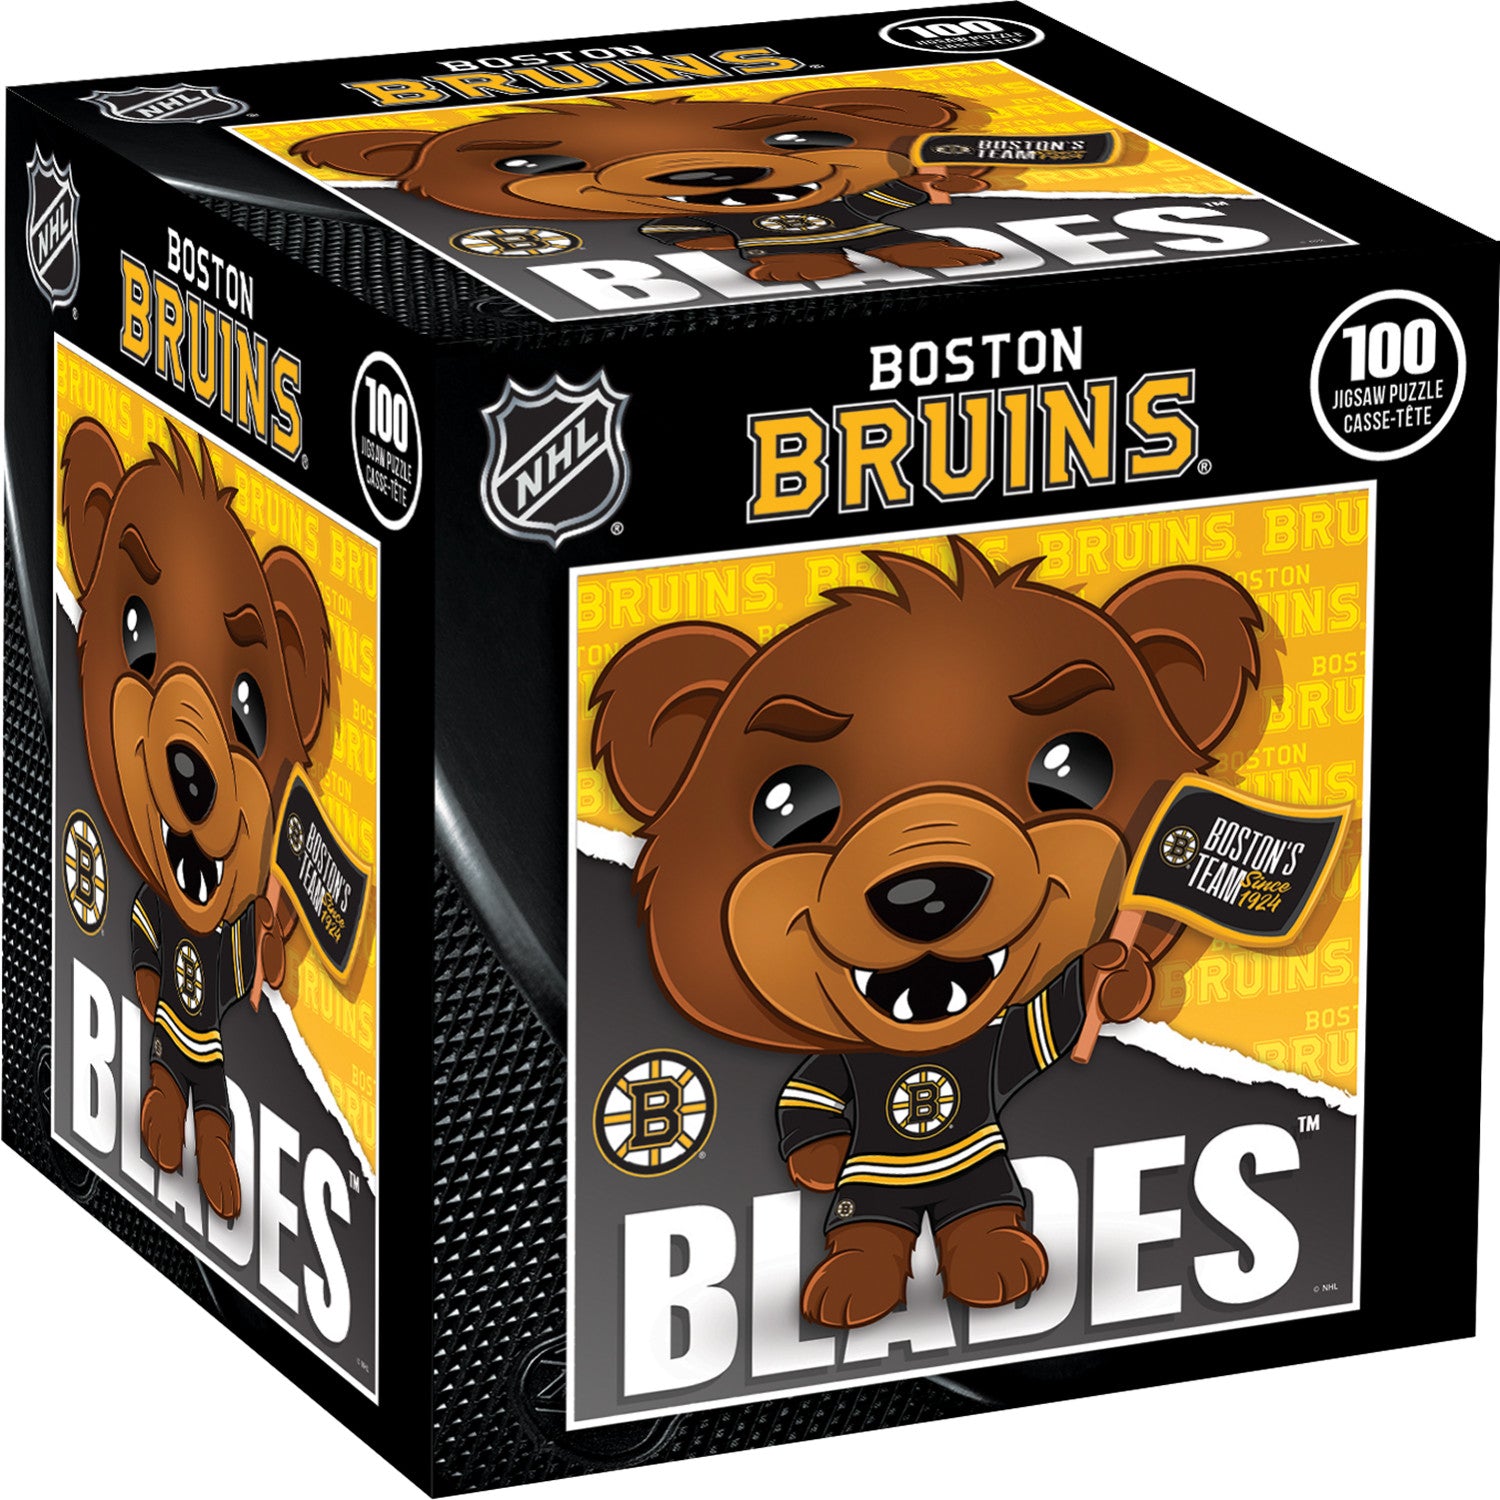 Blades - Boston Bruins Mascot 100 Piece Jigsaw Puzzle